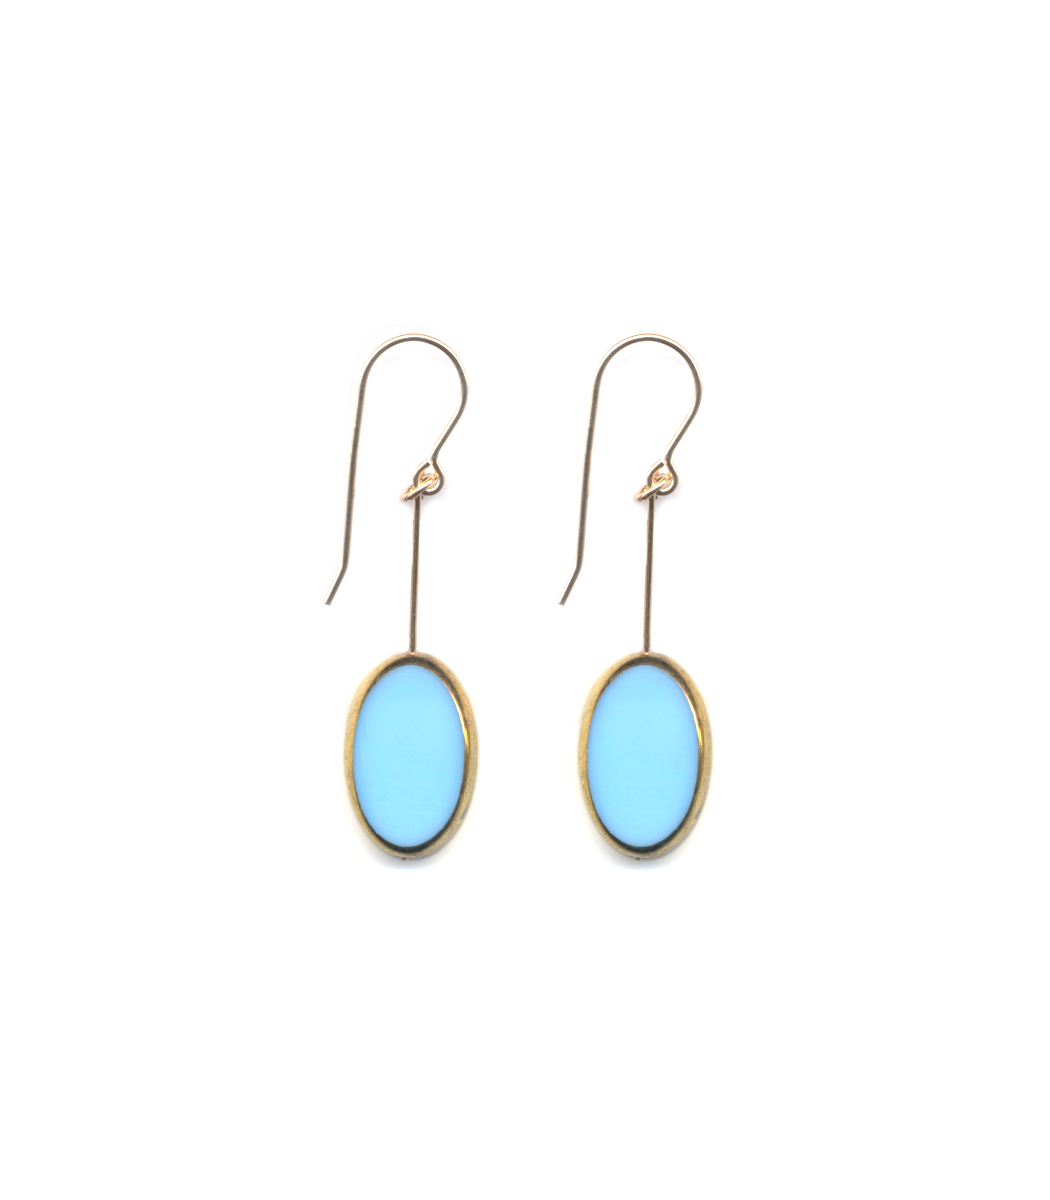 E1537 Blue Oval Earrings